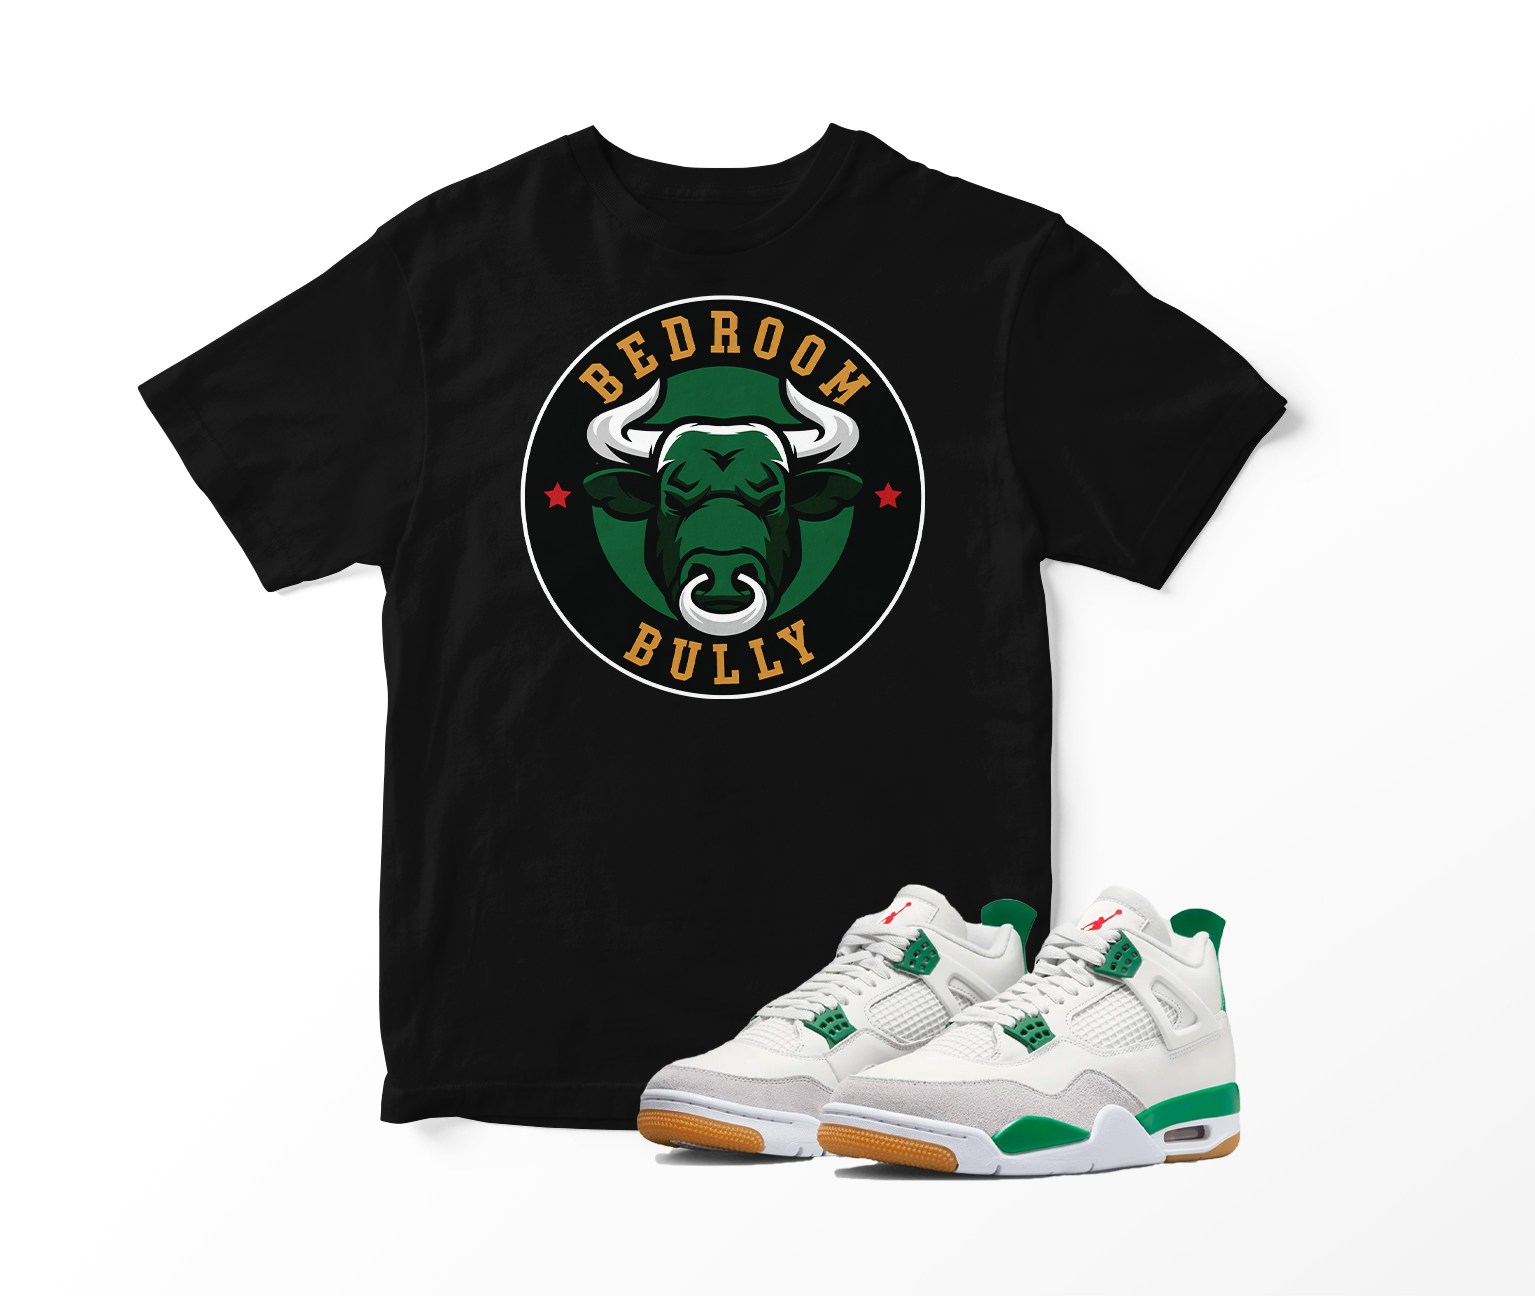 'Bedroom Bully' Custom Graphic Short Sleeve T-Shirt To Match Air Jordan 4 Pine Green